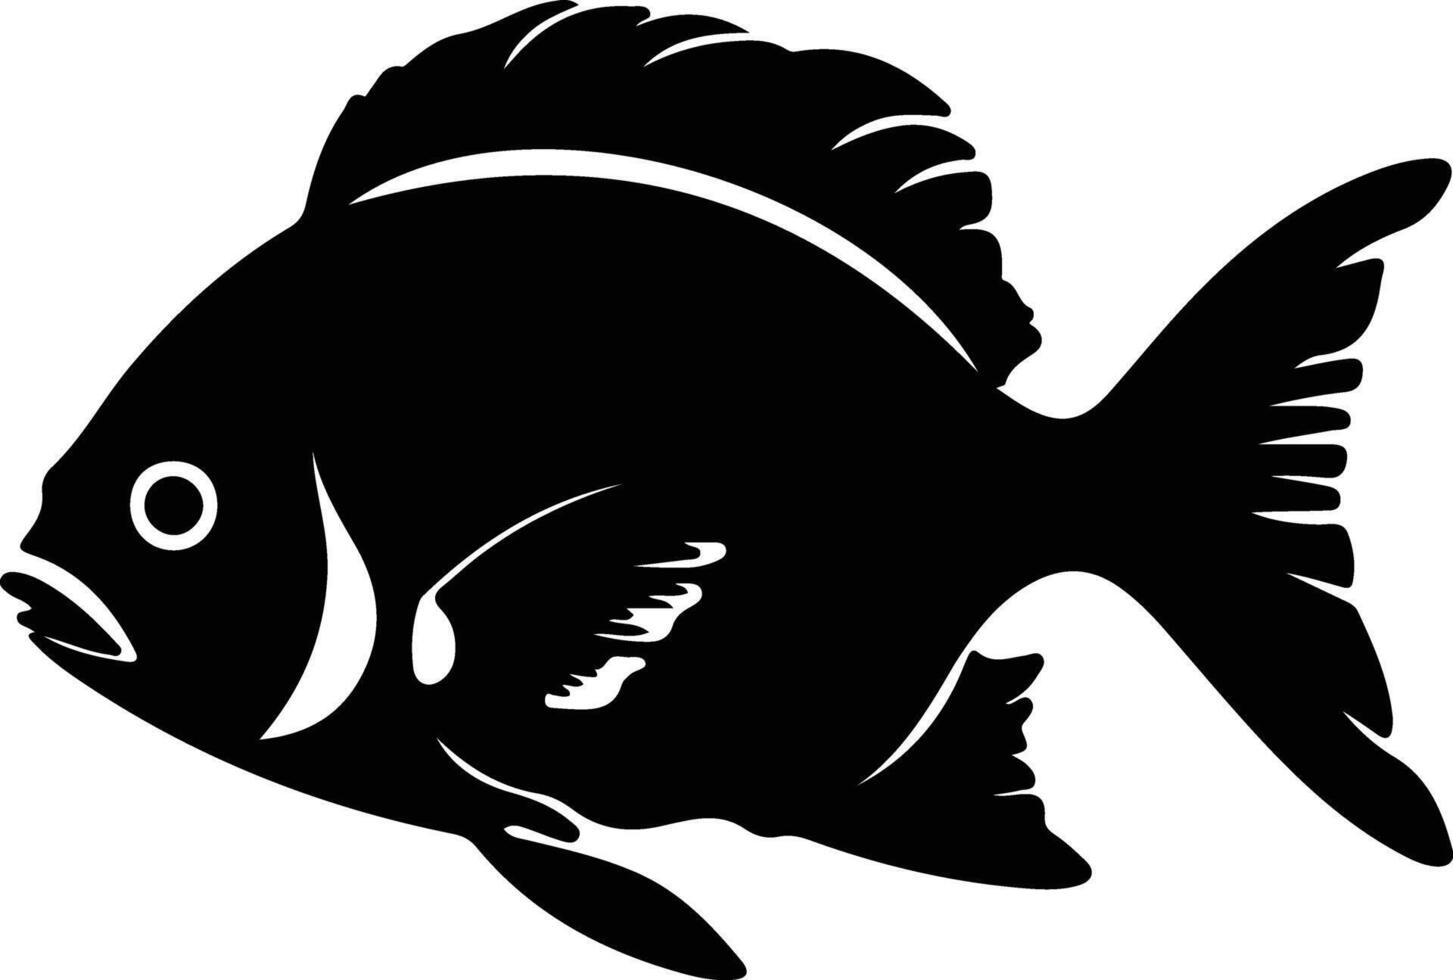 piranha black silhouette vector